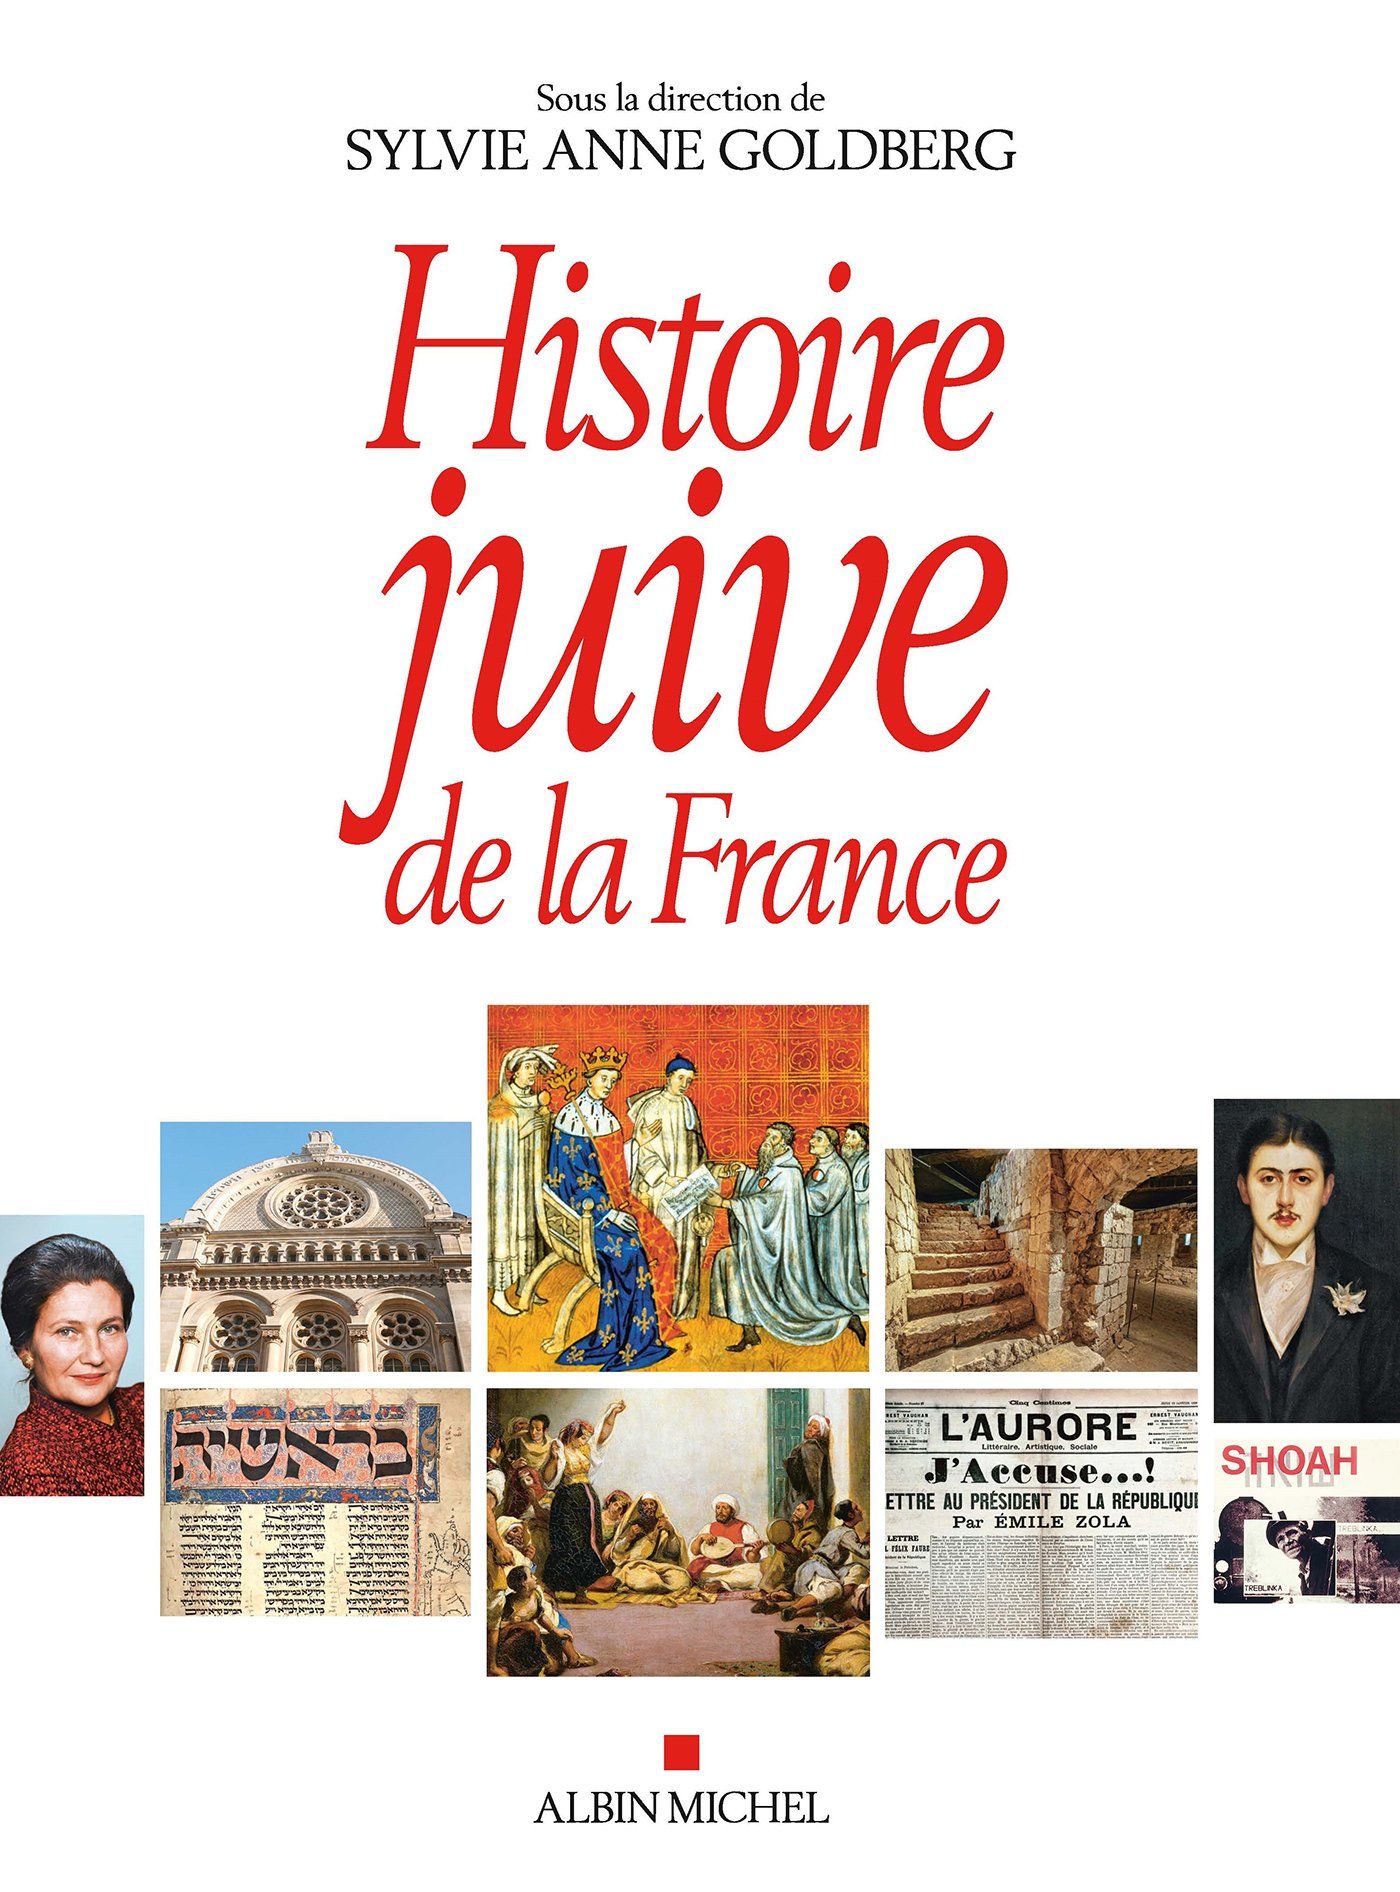 Histoire juive de la France.jpg (1.19 MB)